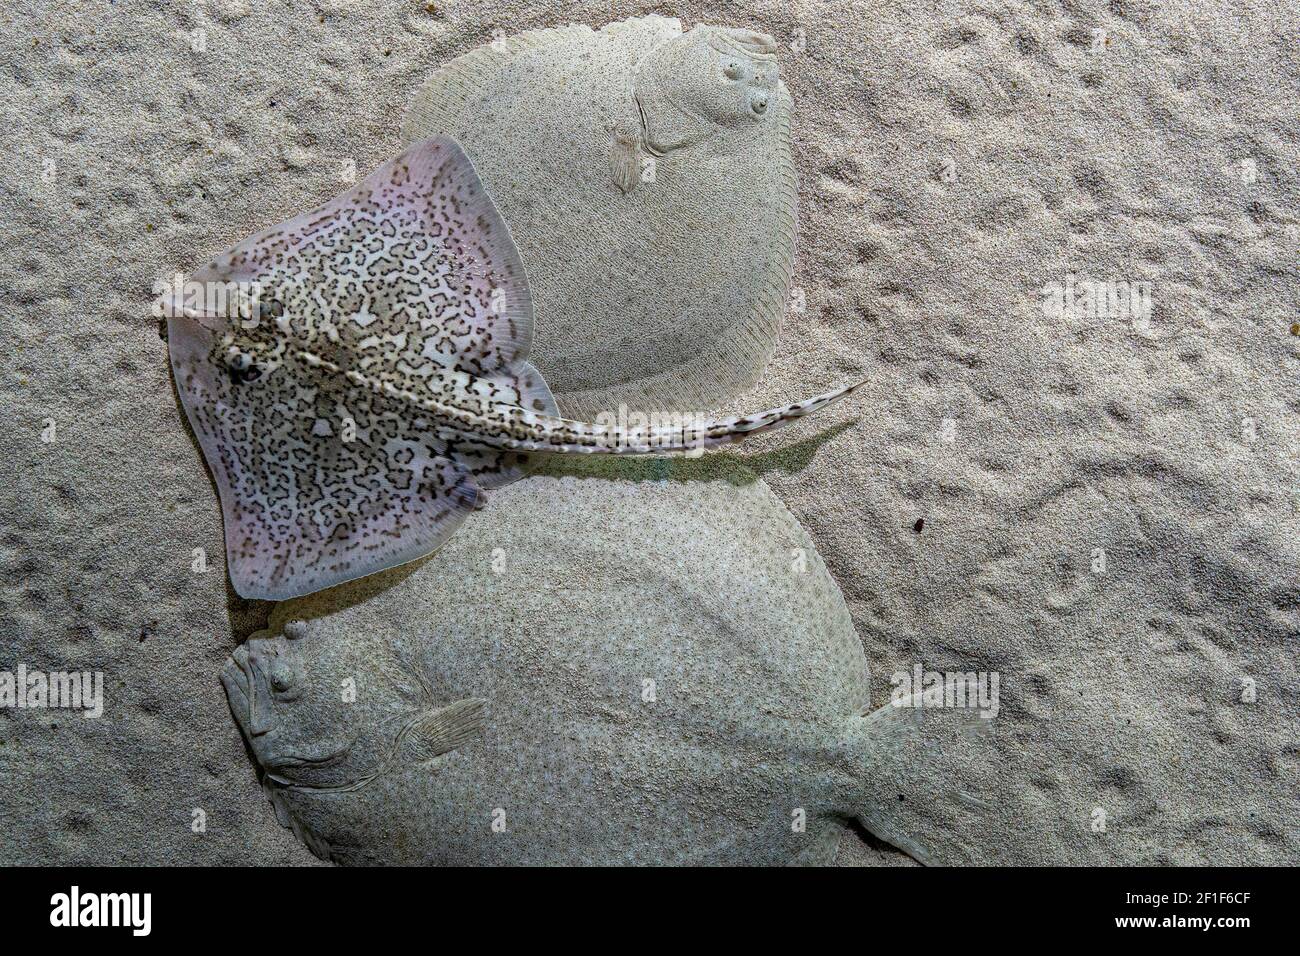 Turbot flat fish underwater and sting ray fish on sand bottom Stock Photo